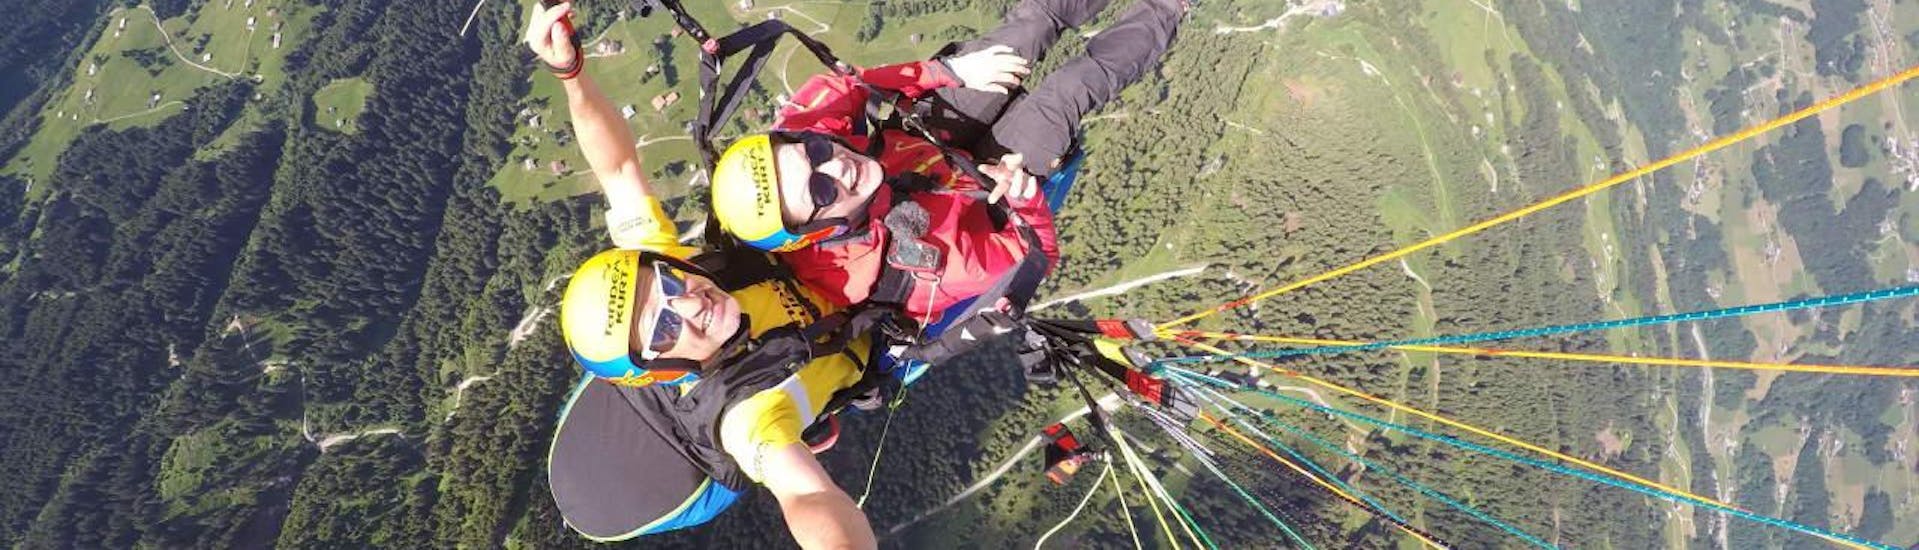 Tandem Paragliding im Montafon - 3 Berge Flug.